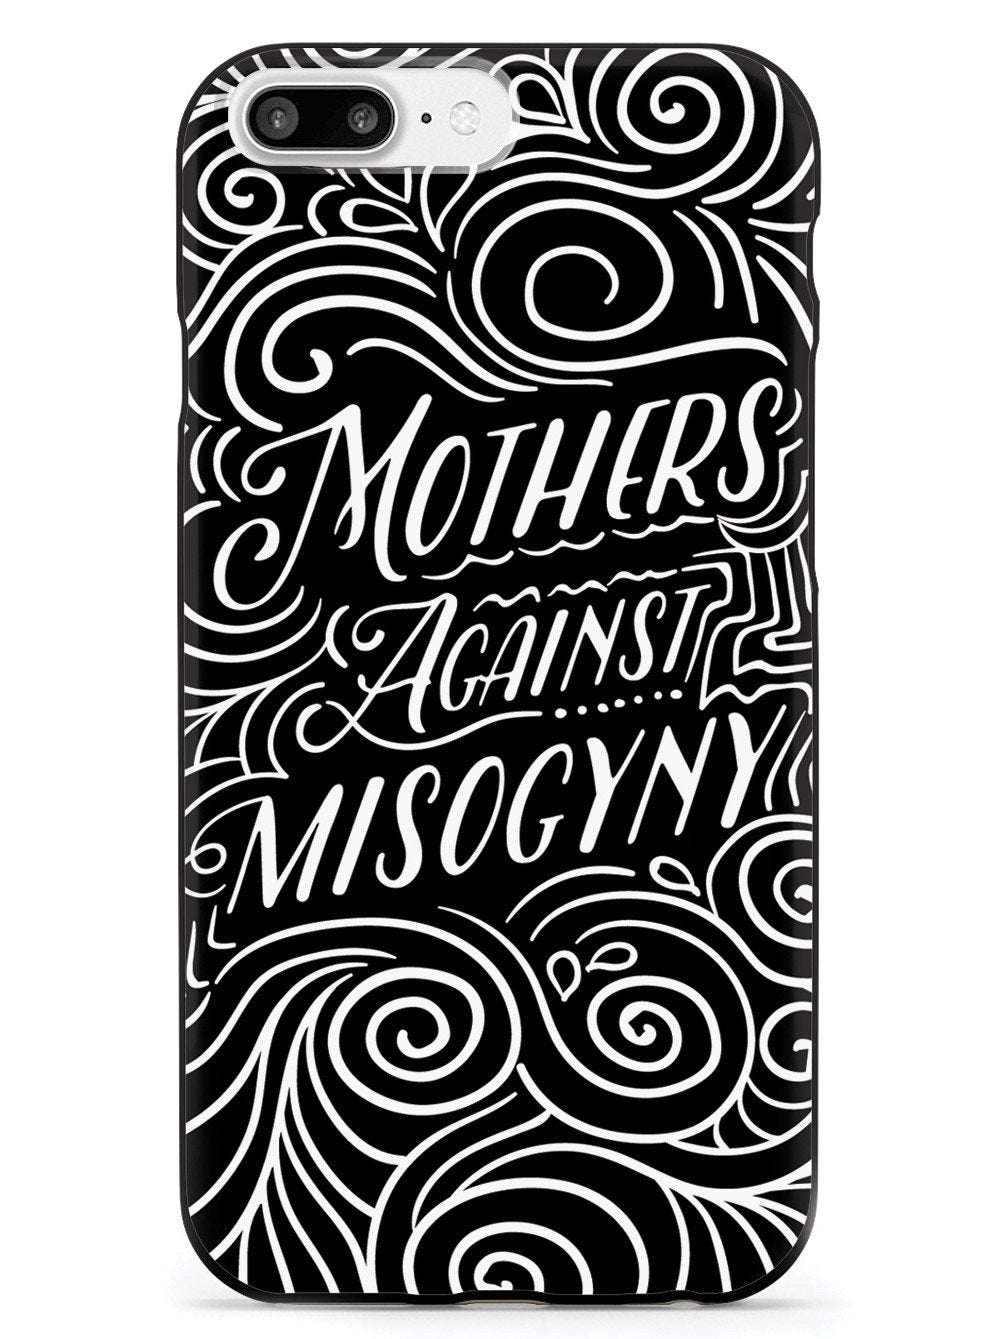 Mothers Against Misogyny - Black Case